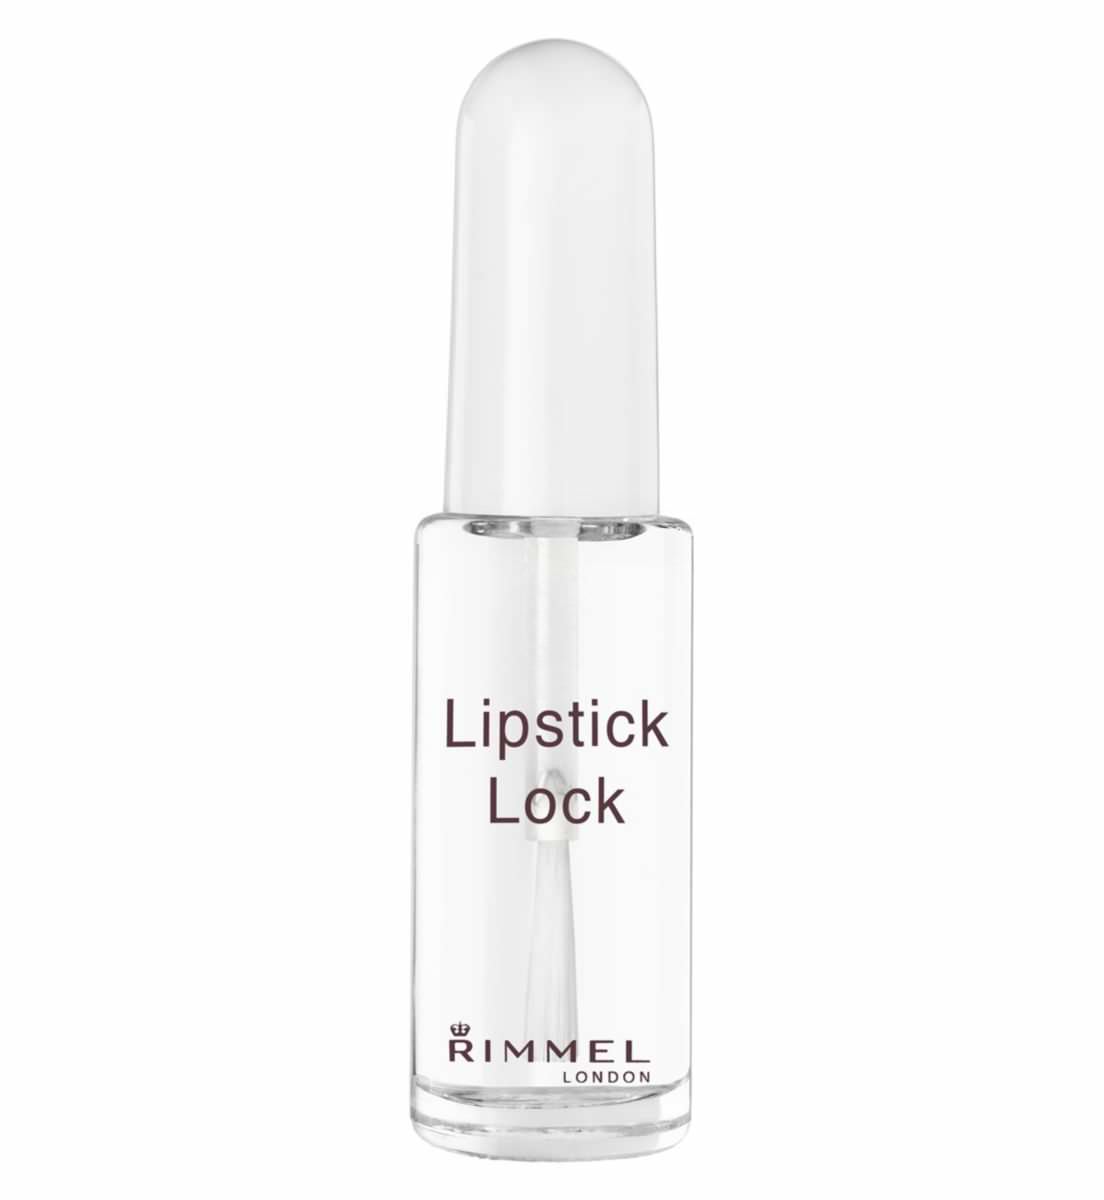 Rimmel Lipstick Lock